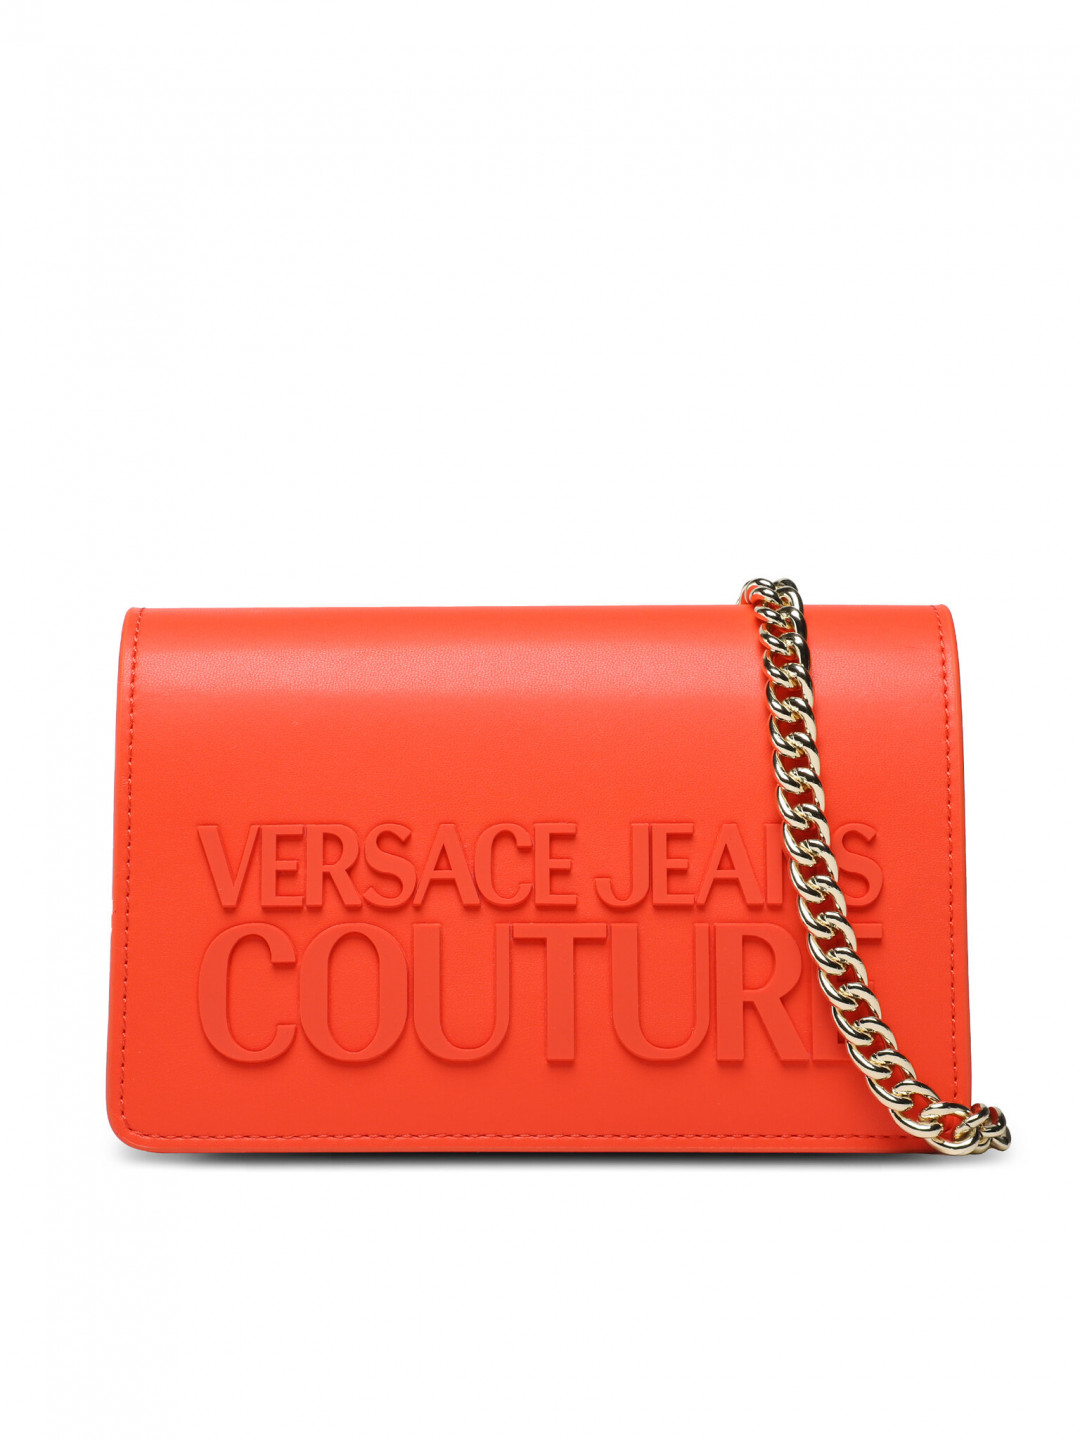 Versace Jeans Couture Kabelka 74VA4BH2 Červená